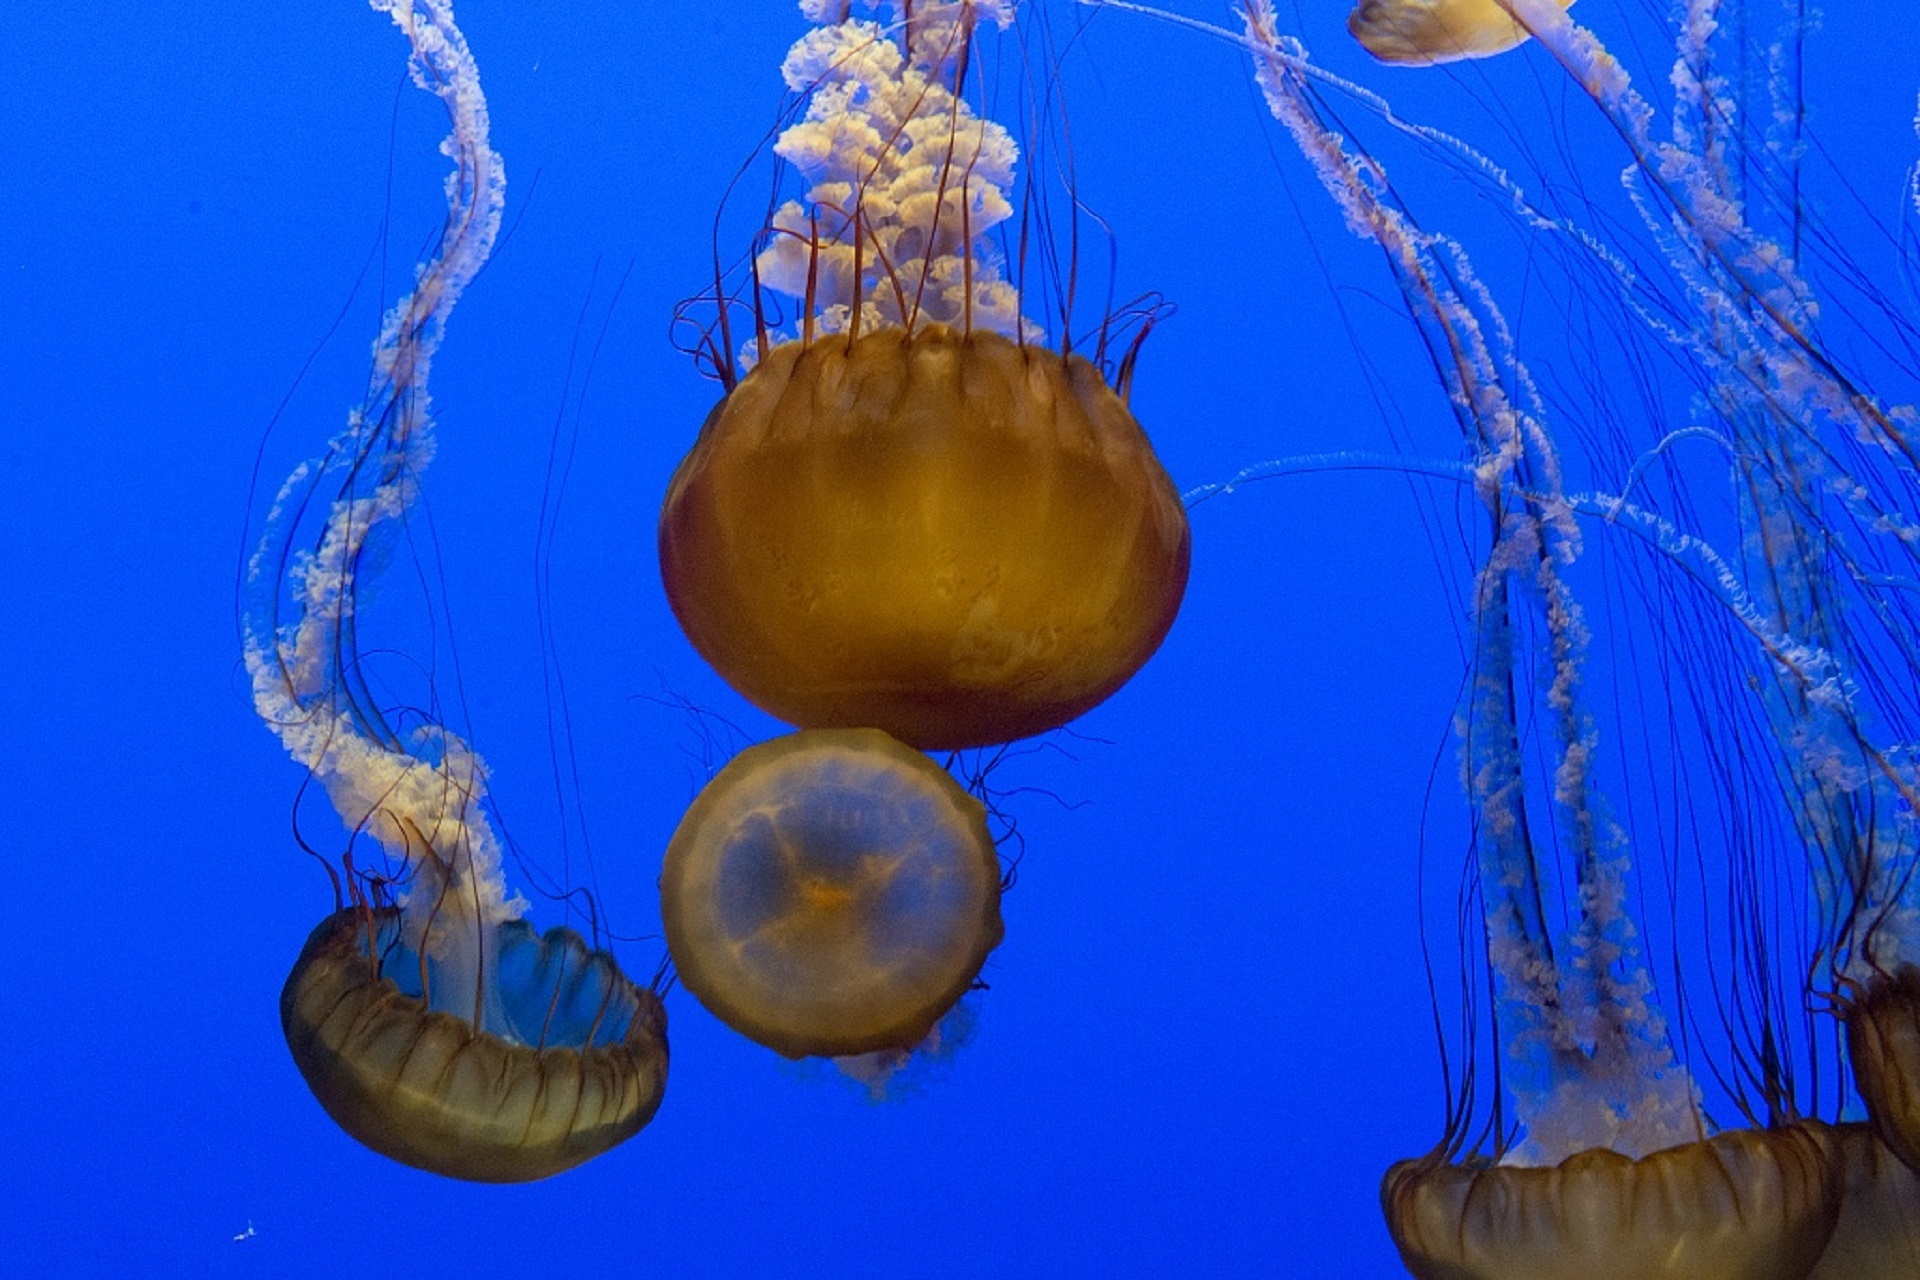 Jellyfish in the ocean photo